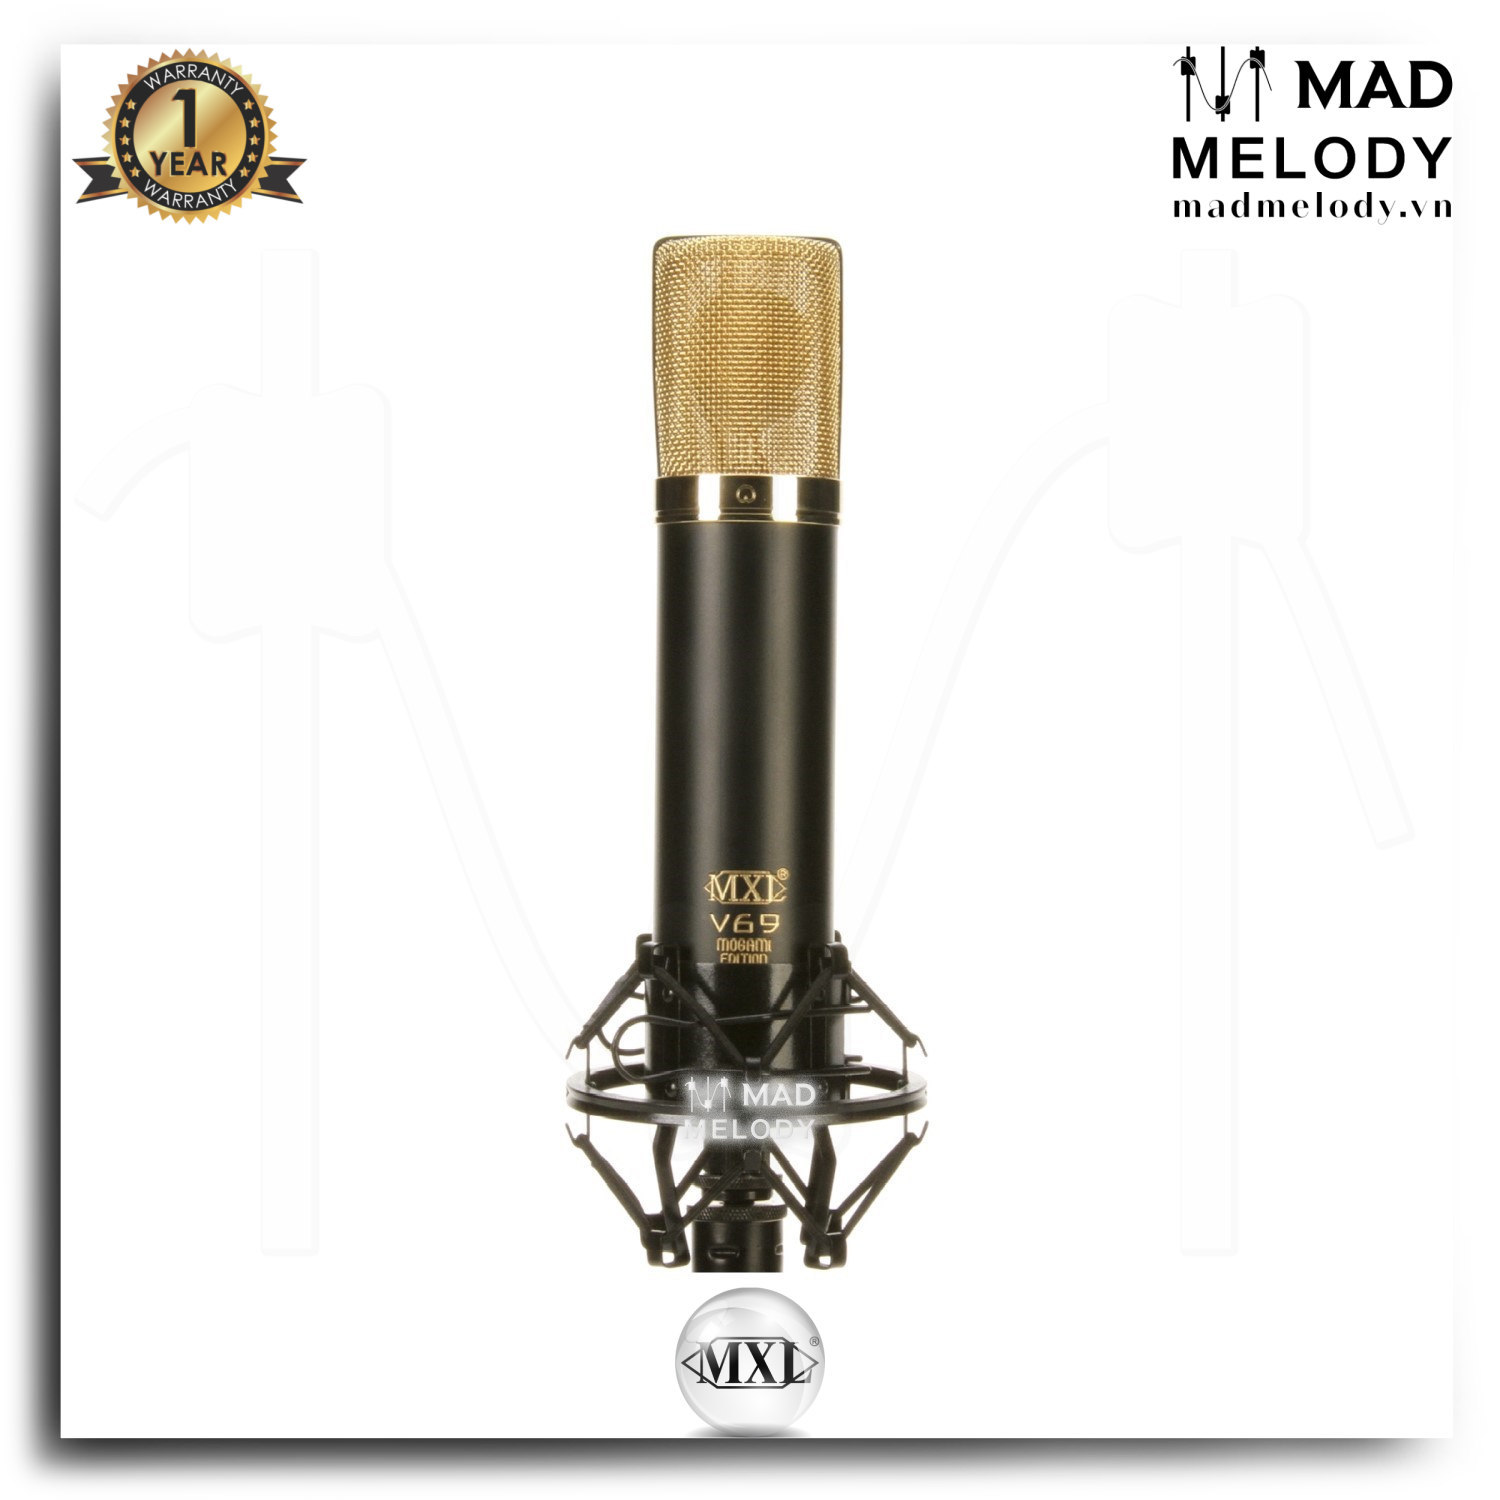 Micro　MXL　V69M　Mad　EDT　MOGAMI　Edition　Tube　Microphone　Condenser　Melody　thu　âm